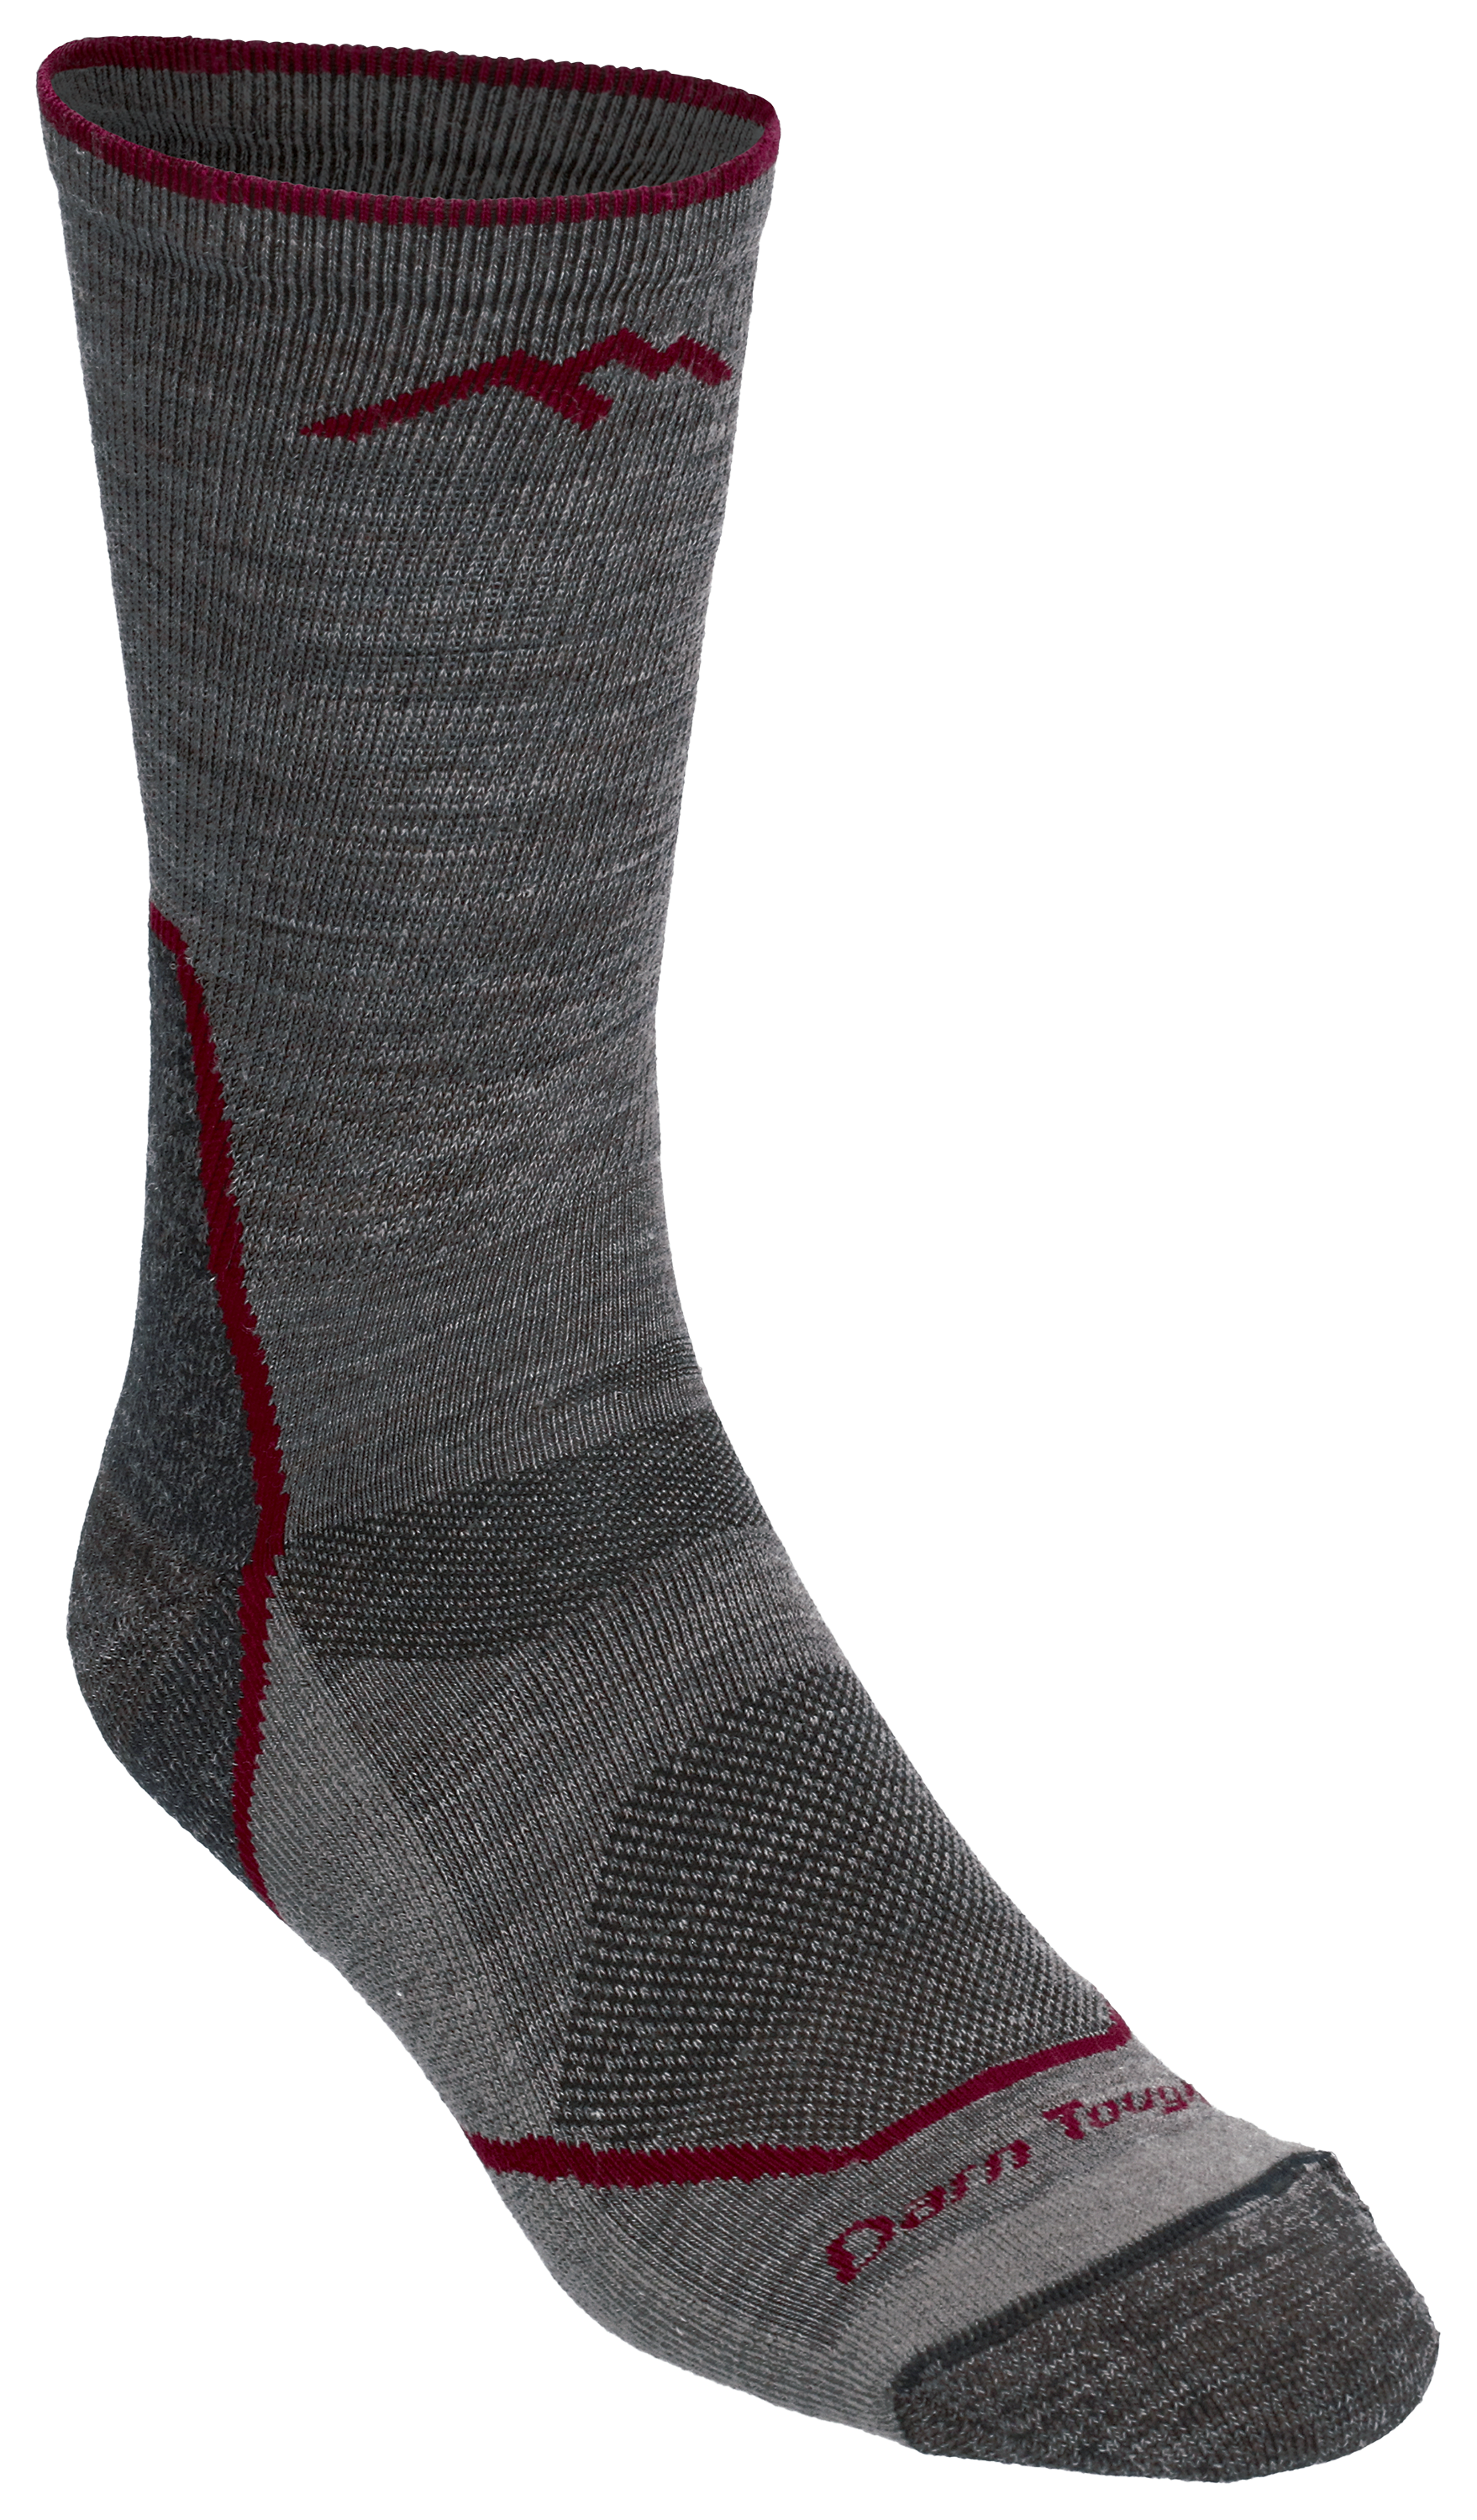 Darn Tough Light Hiker Merino Wool Micro Crew Socks for Men